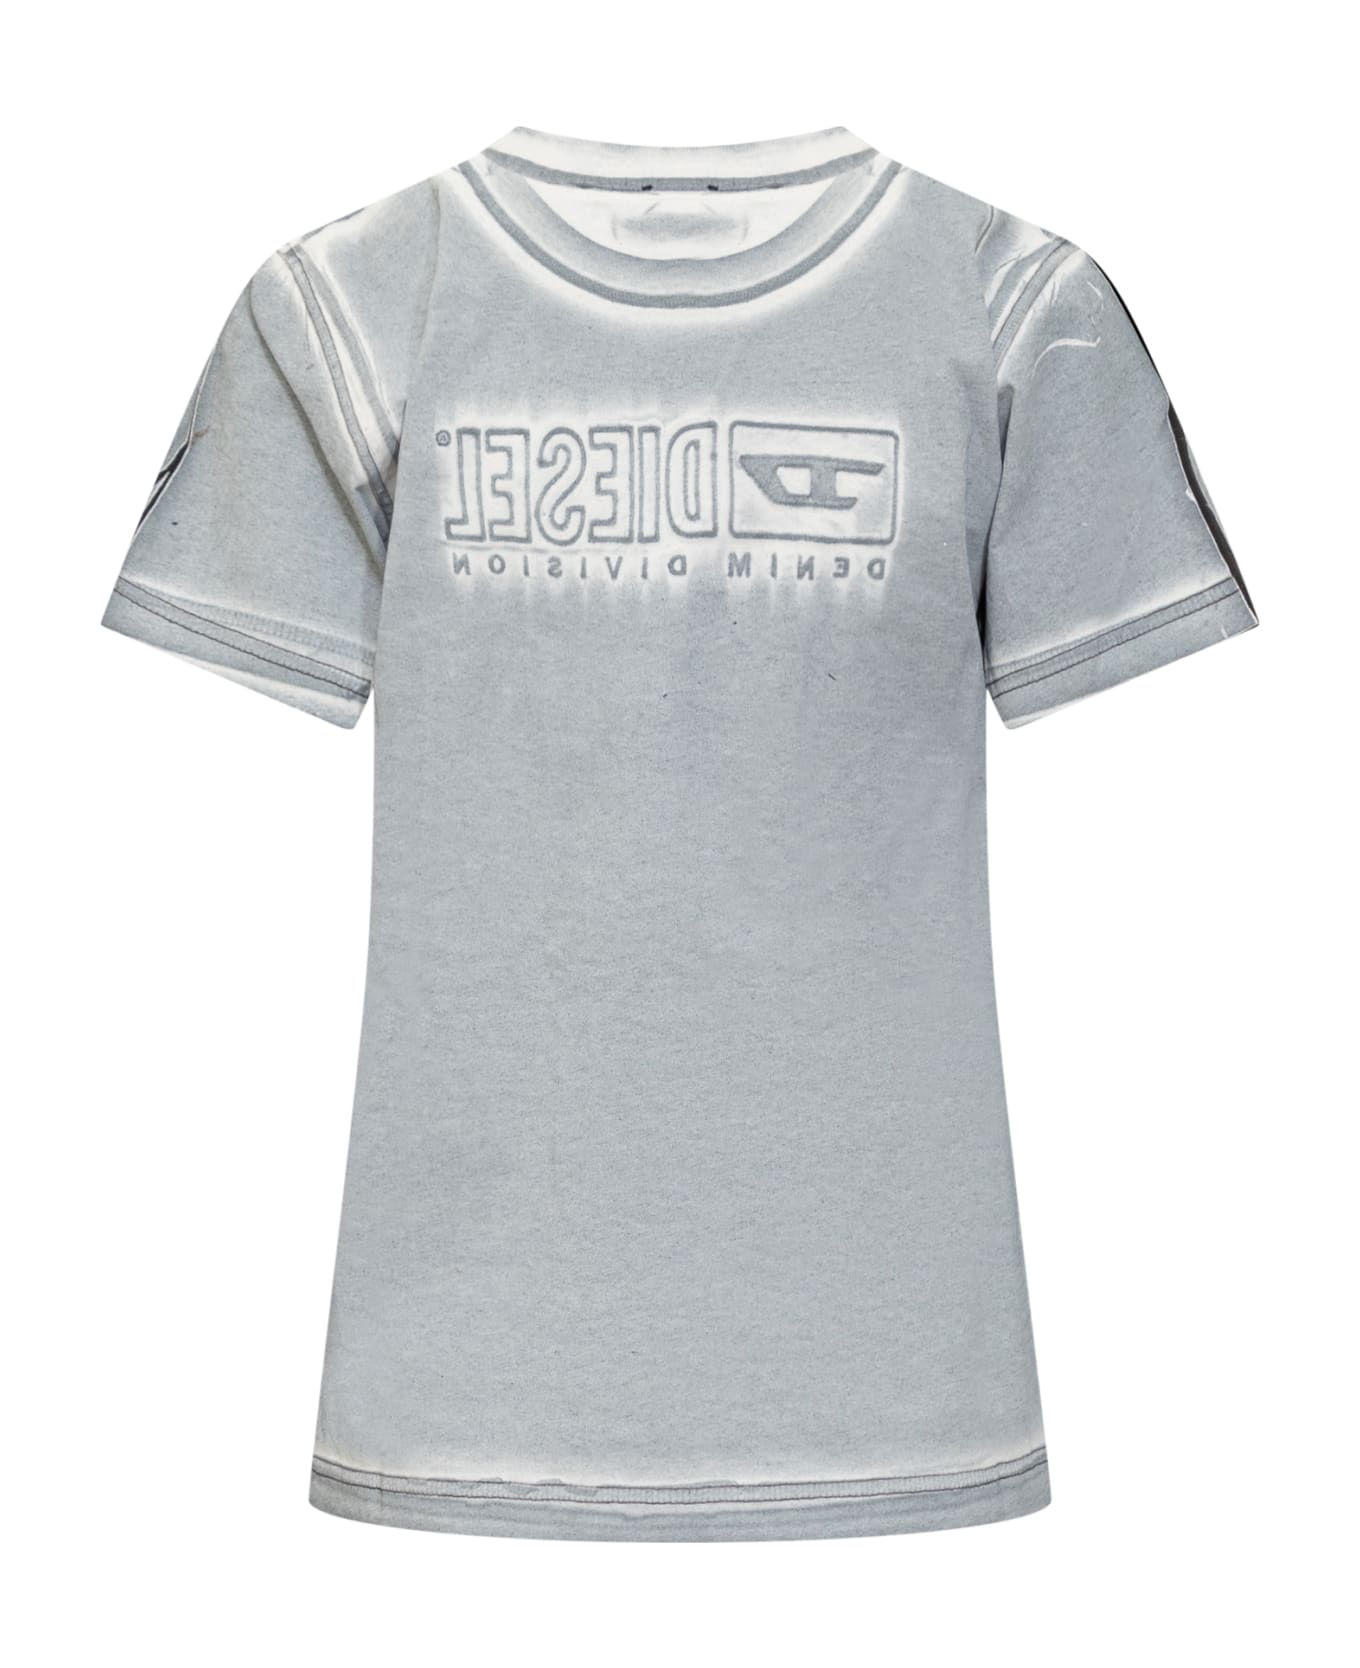 Diesel T-regsn5 T-shirt - A